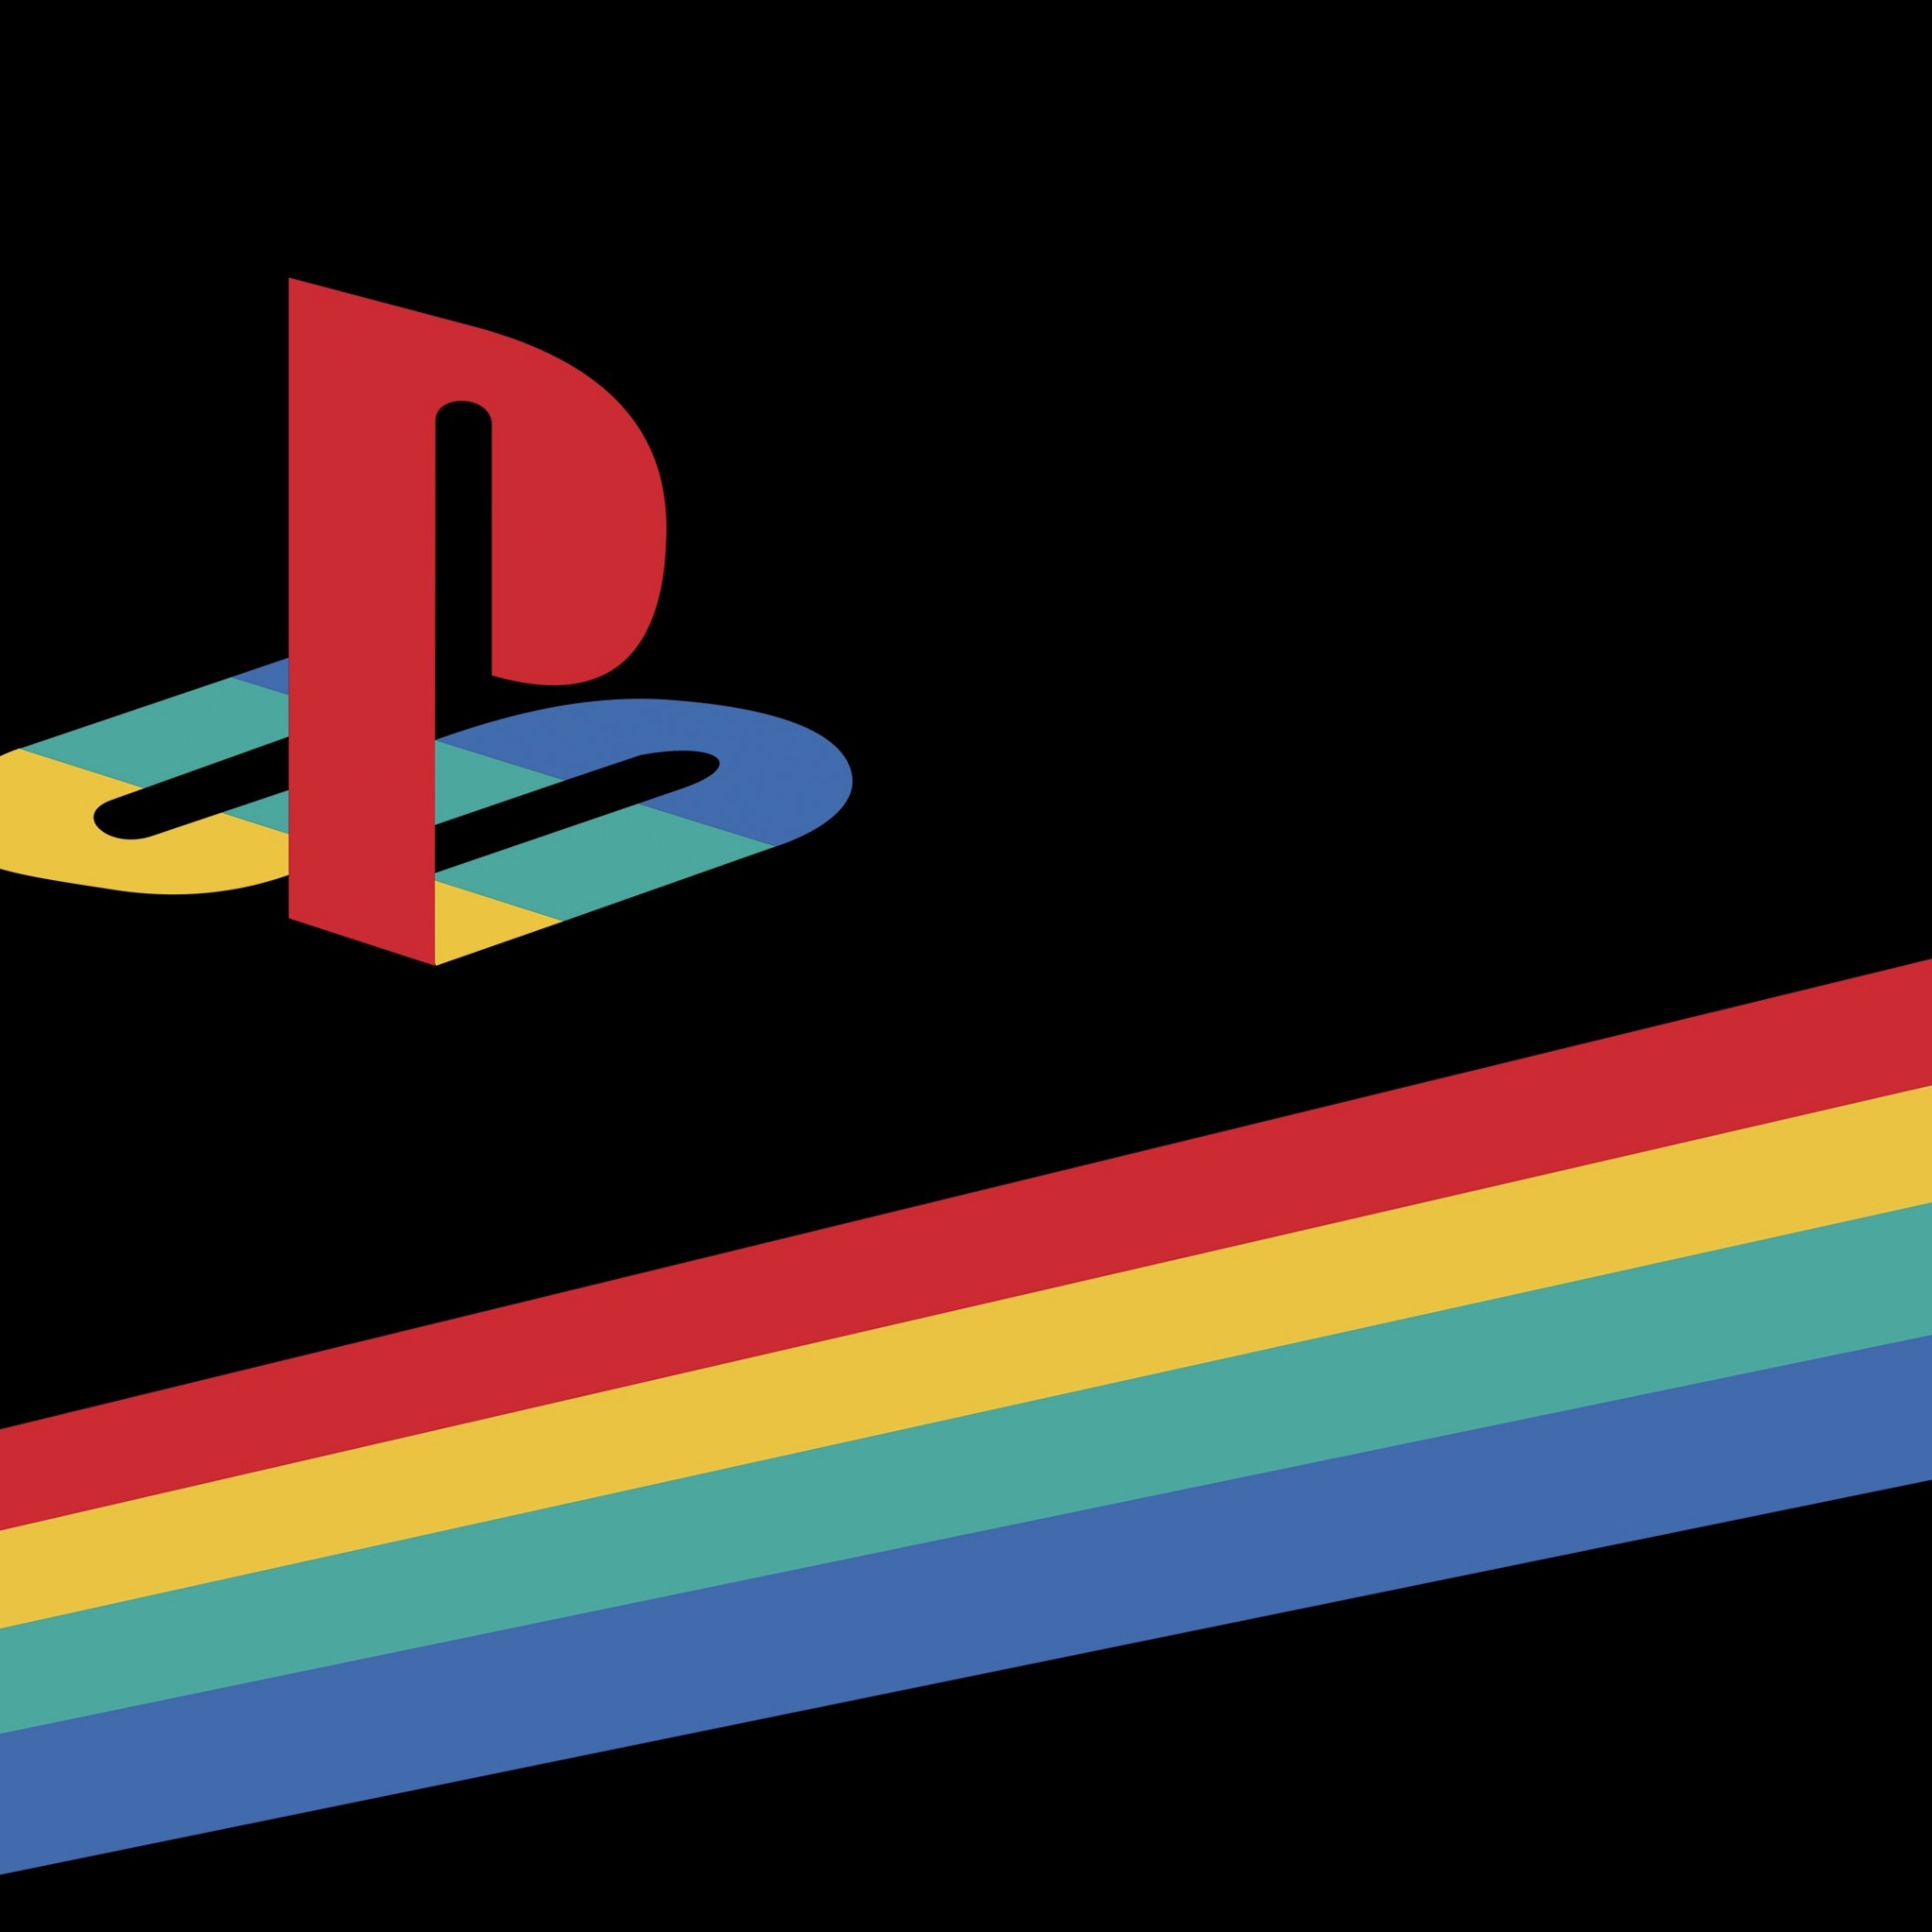 PlayStation Wallpaper 4K, Retro, Logo, AMOLED, Minimal, Colorful, Ribbon, Technology